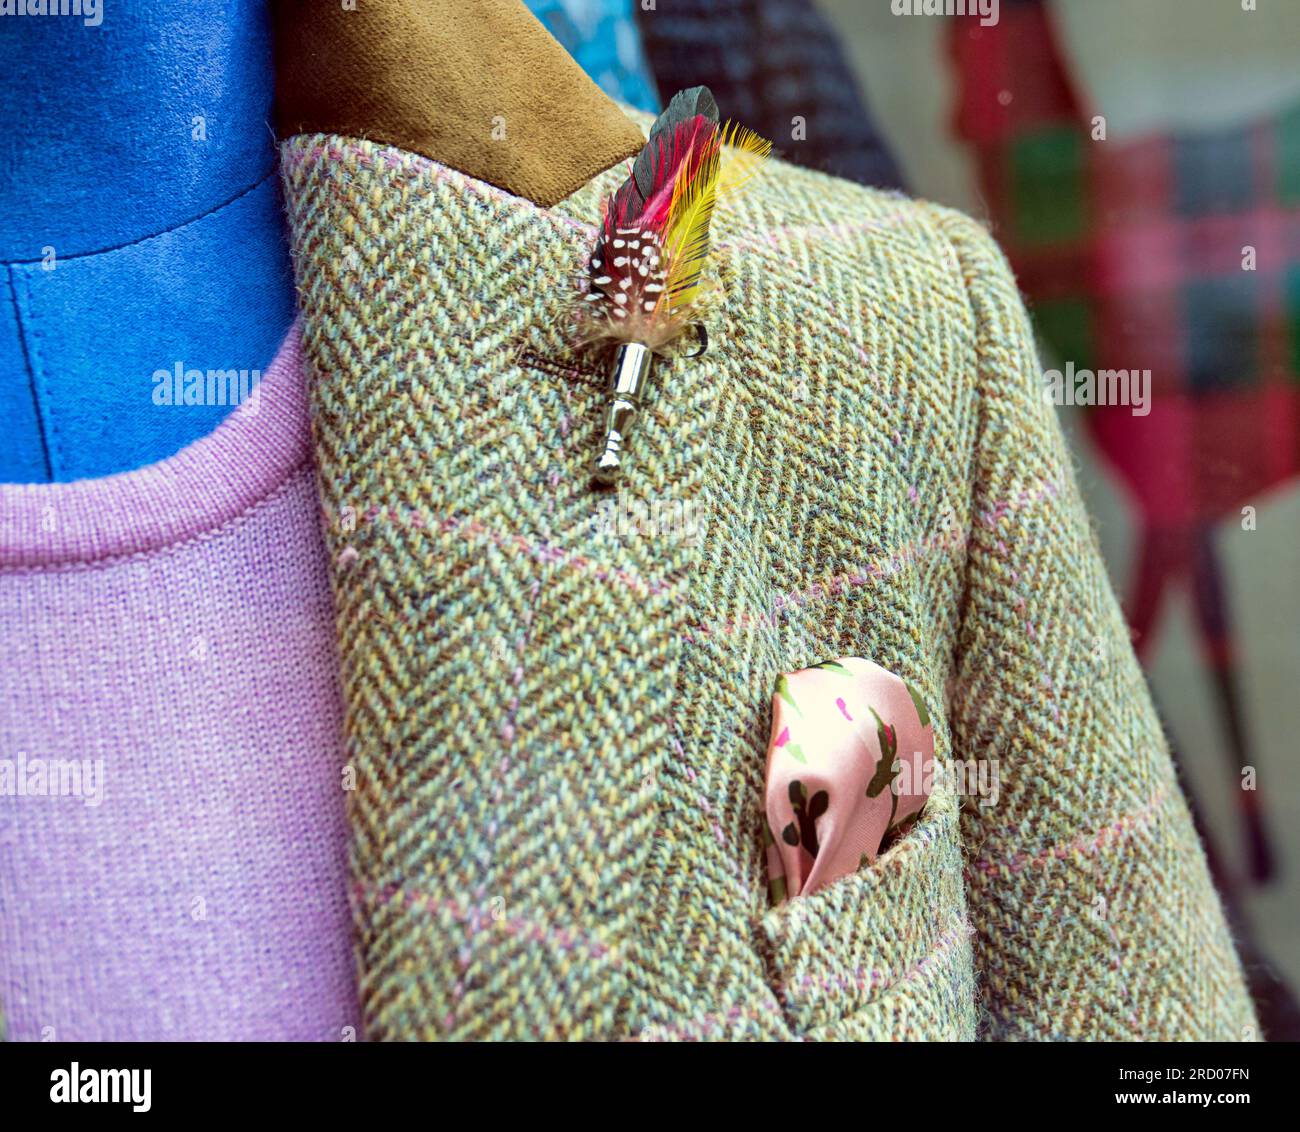 Harris Tweed products in shop window Stock Photo